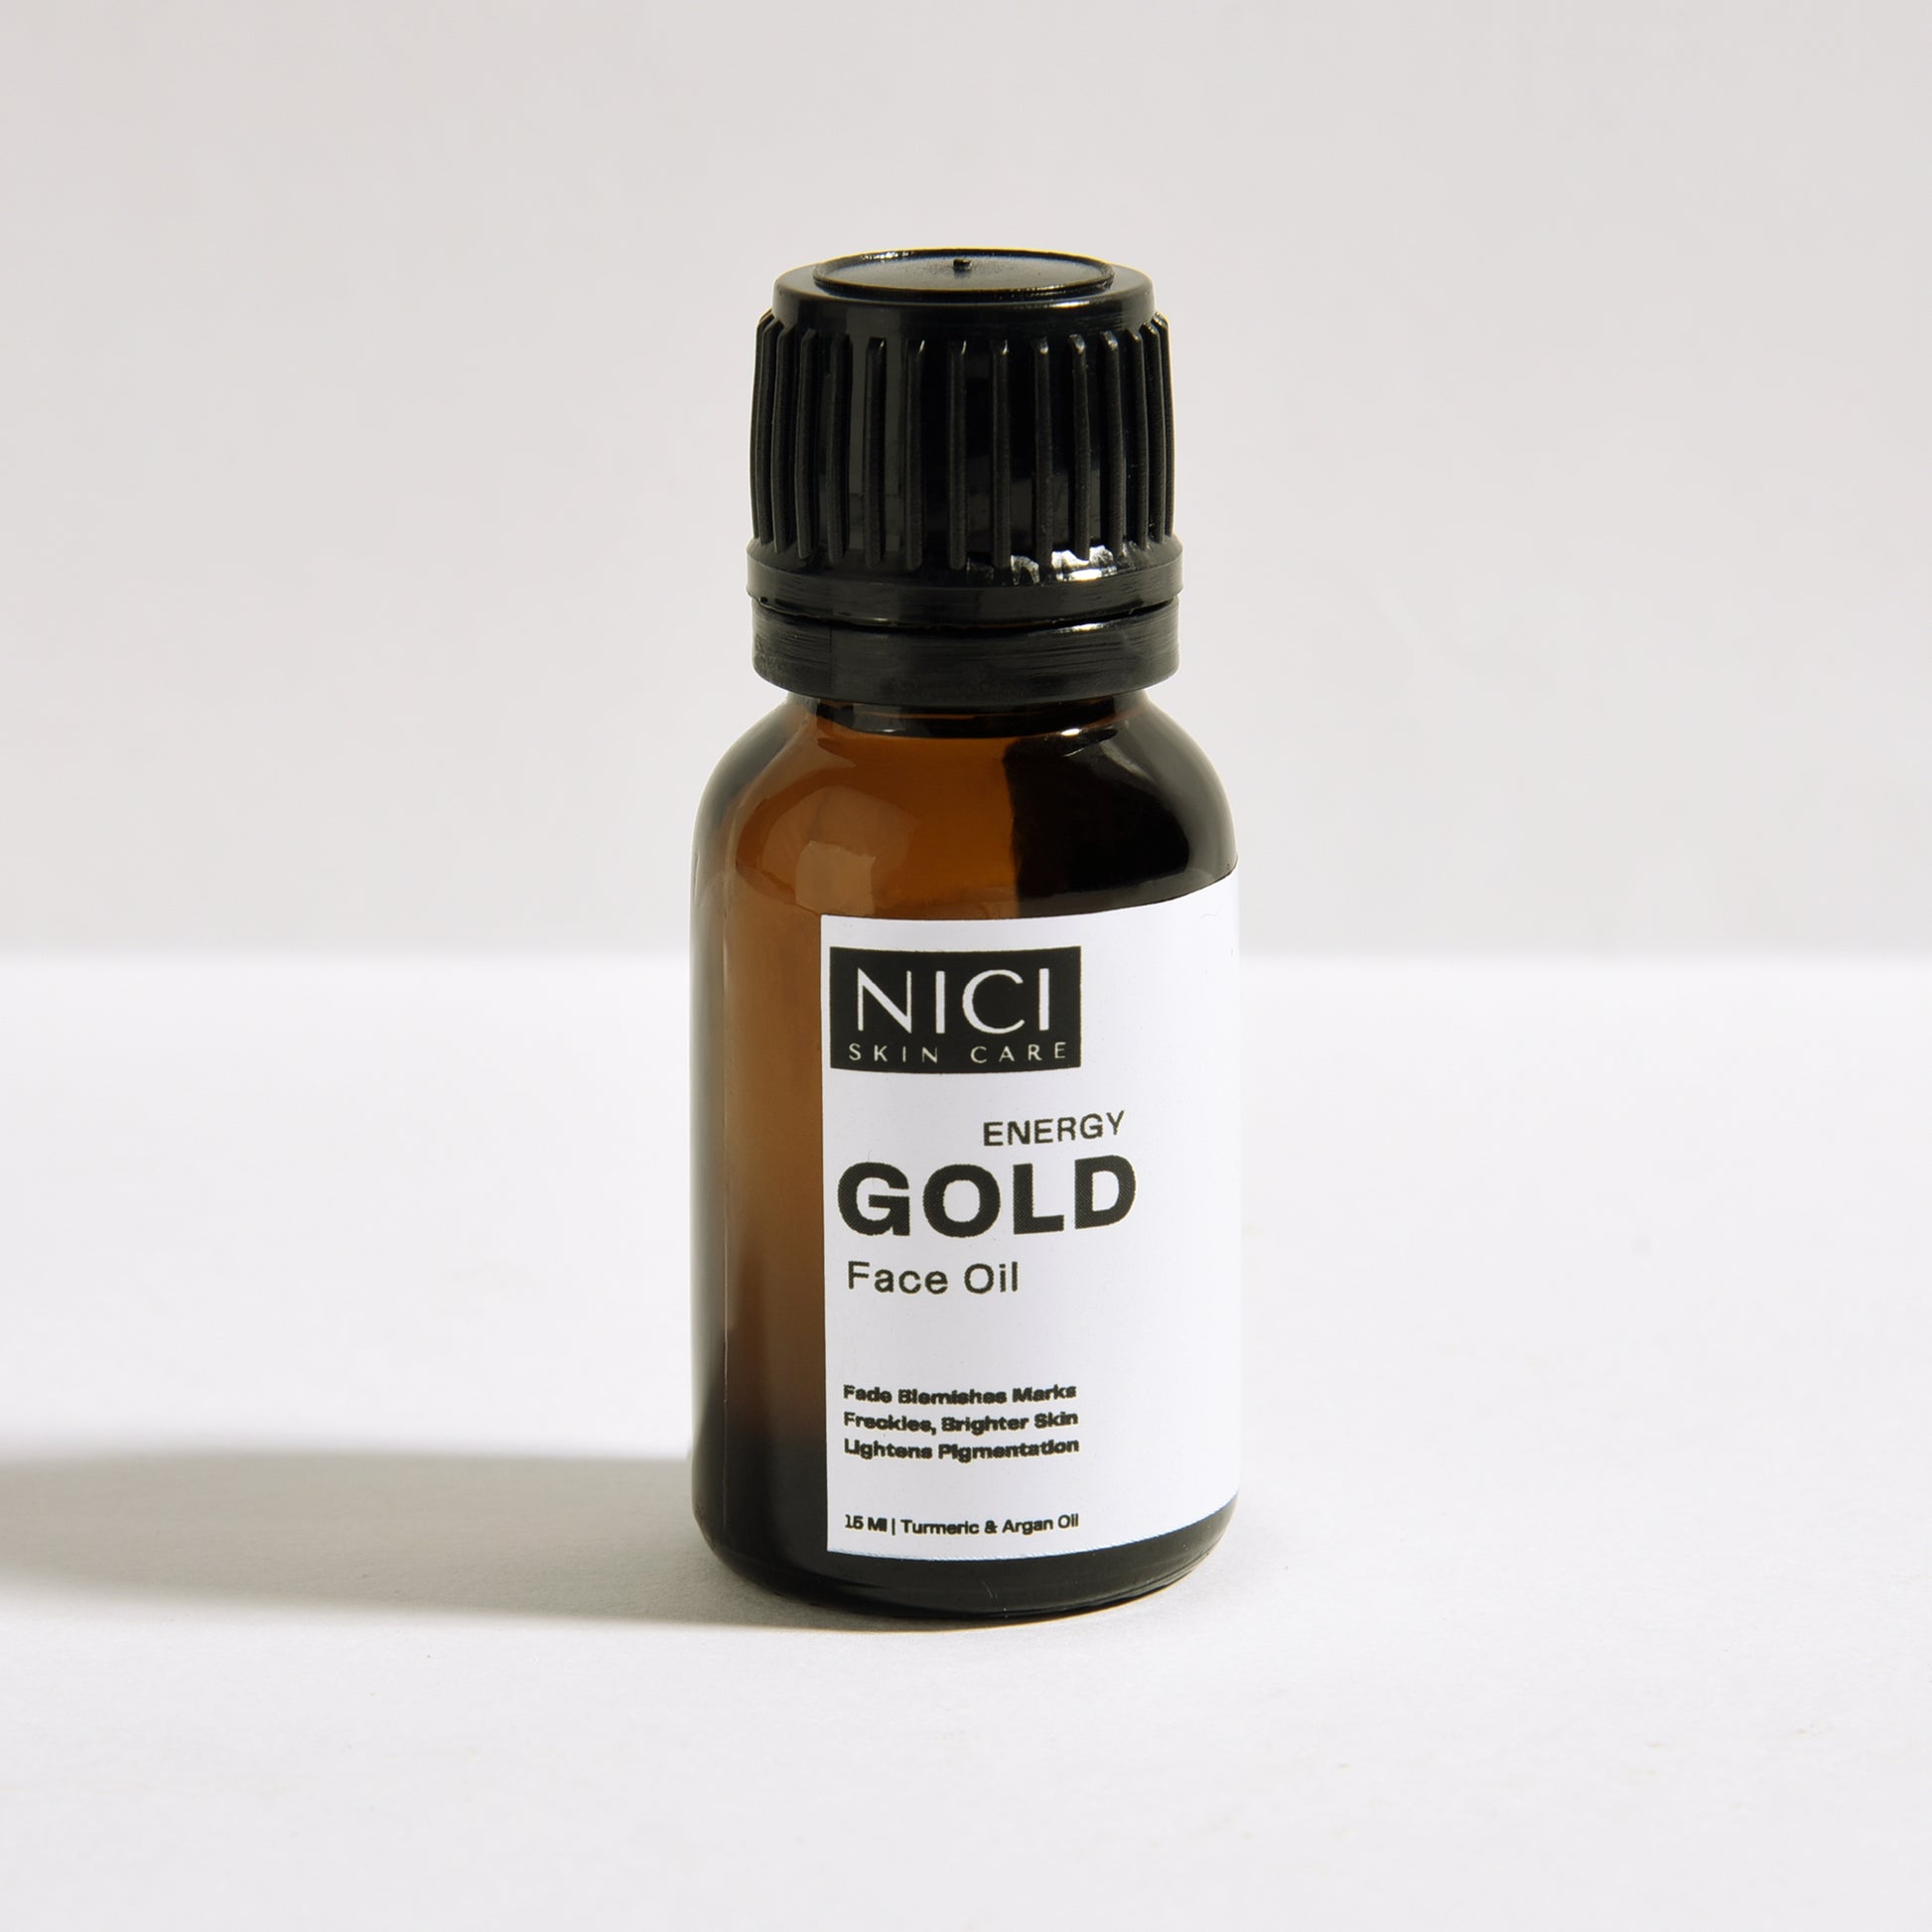 Energy Gold Face Oil Nicci Skin Care